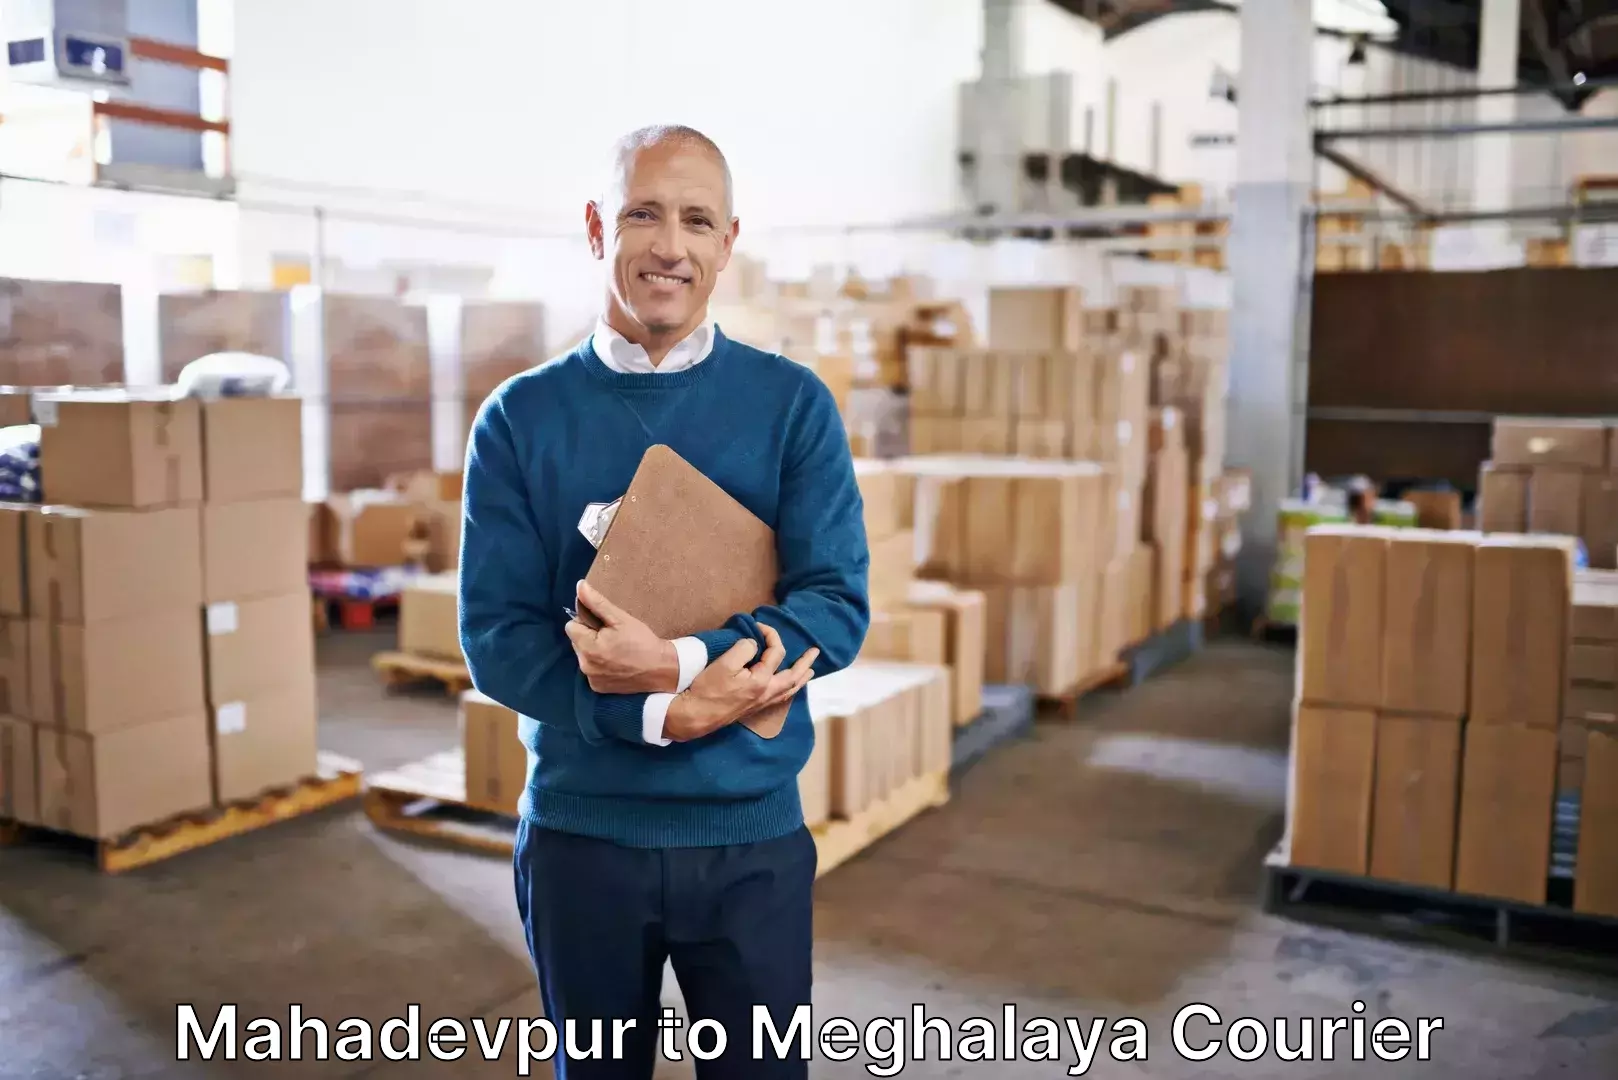 Luggage shipment specialists Mahadevpur to Meghalaya